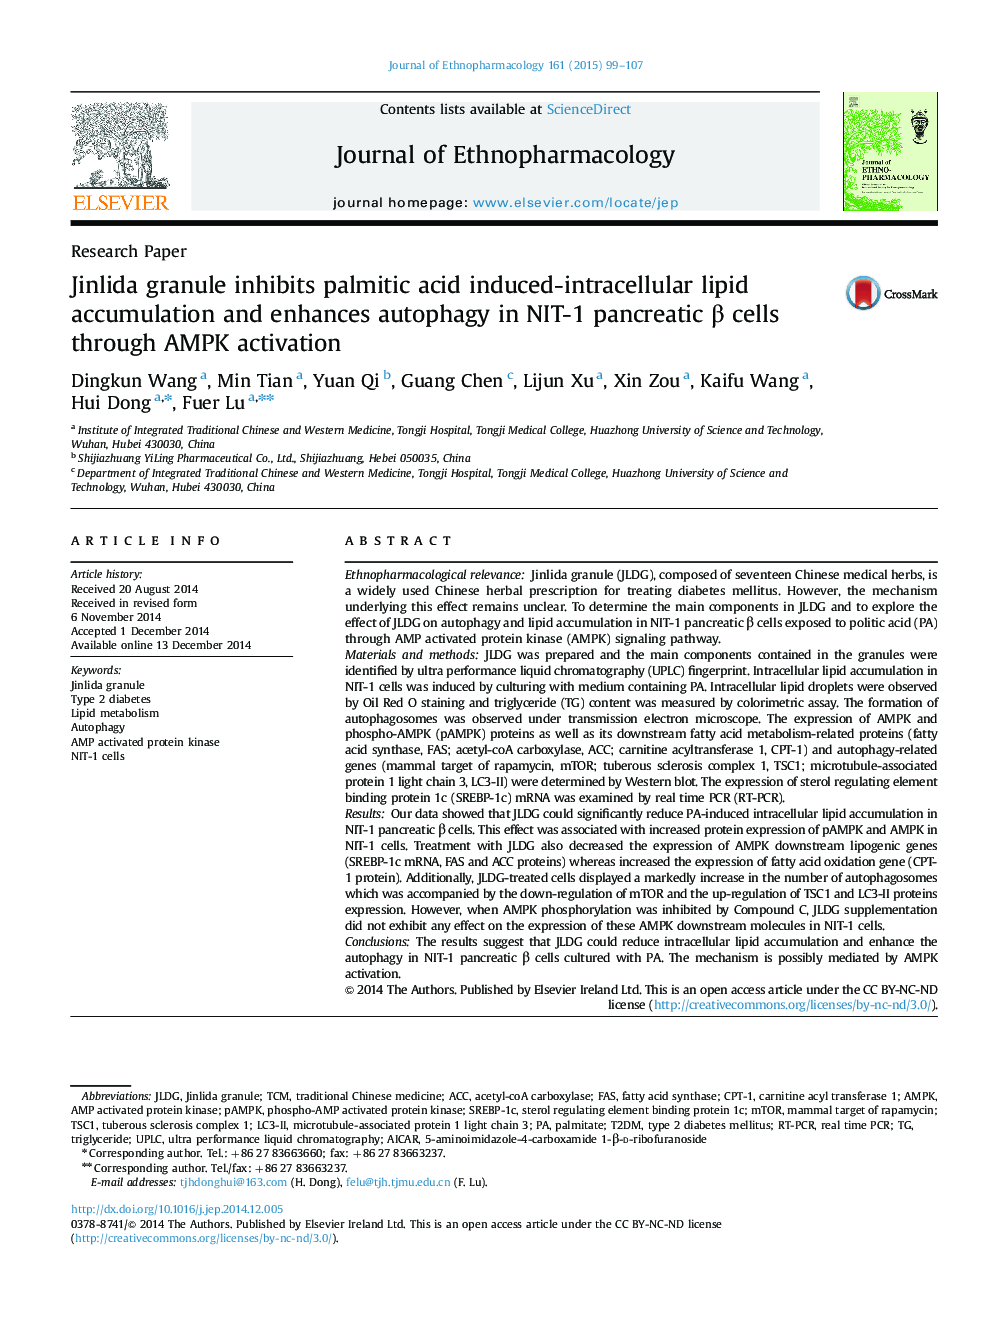 Jinlida granule inhibits palmitic acid induced-intracellular lipid accumulation and enhances autophagy in NIT-1 pancreatic Î² cells through AMPK activation